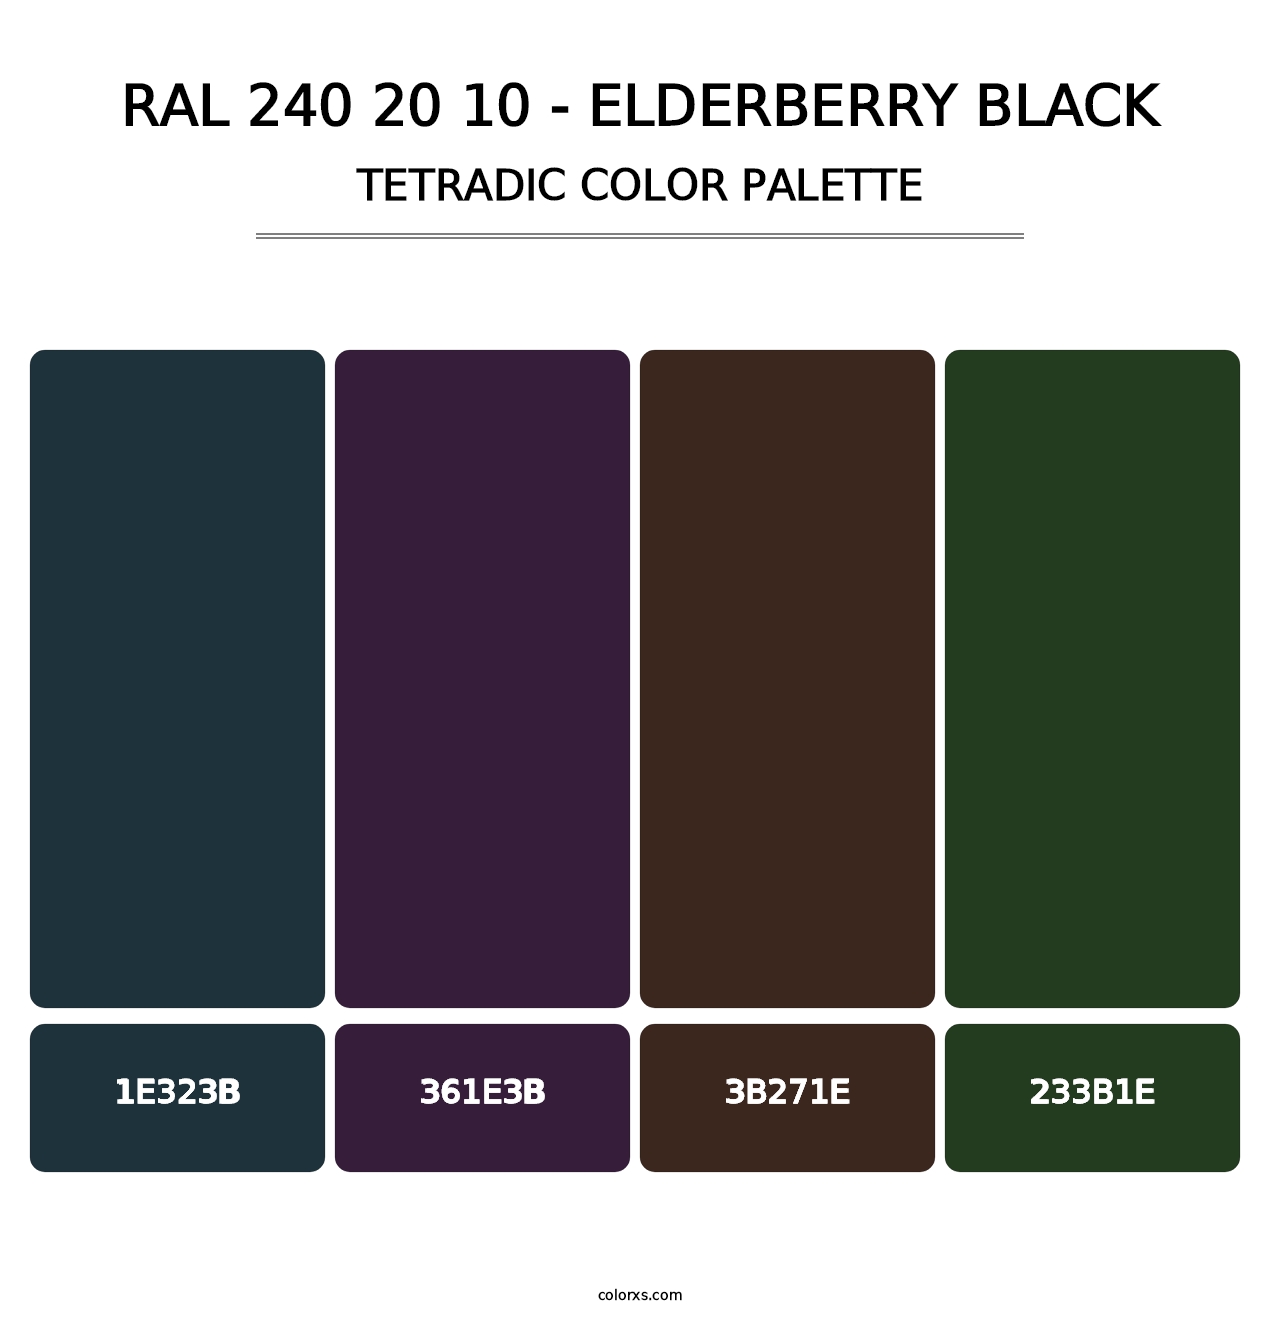 RAL 240 20 10 - Elderberry Black - Tetradic Color Palette